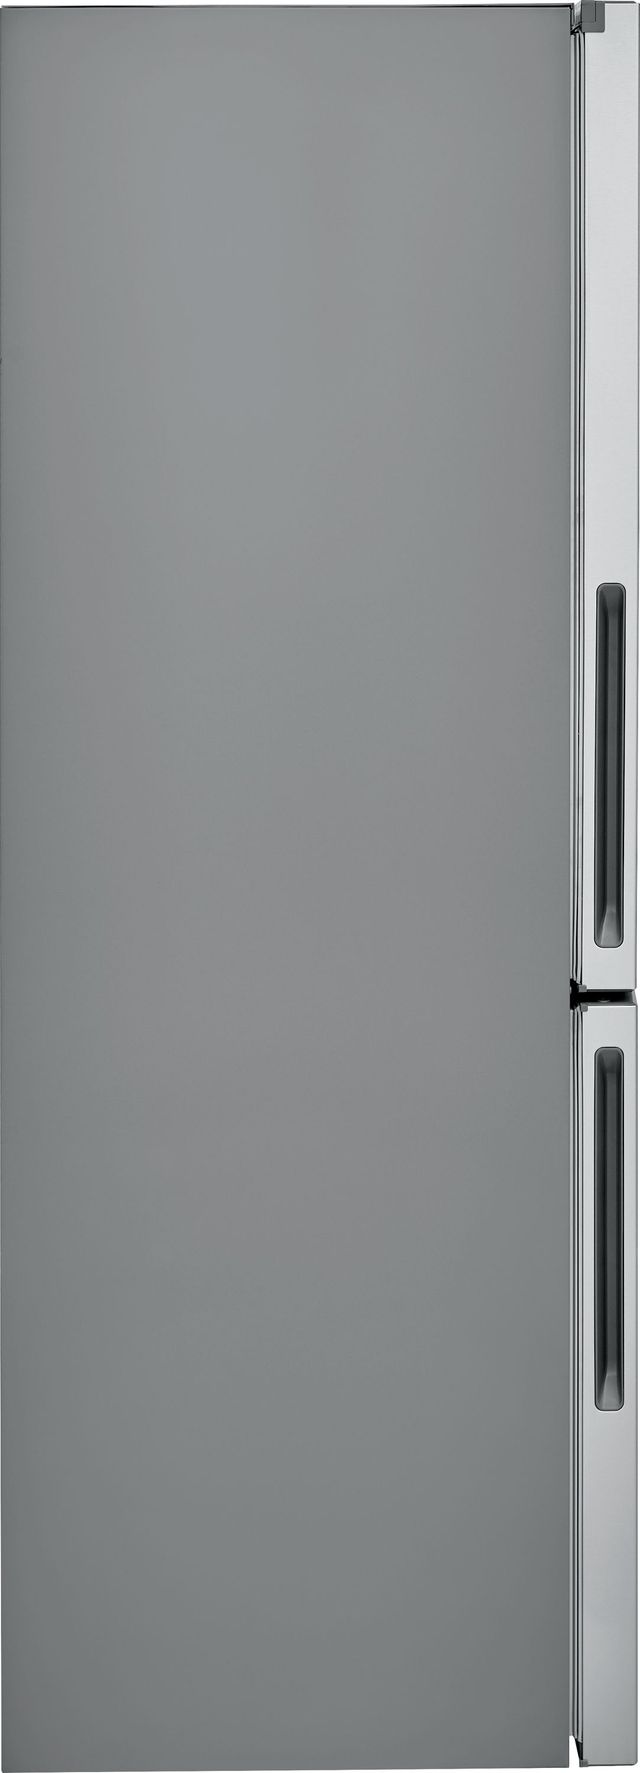 Electrolux 11.8 Cu. Ft. Stainless Steel Bottom Freezer Refrigerator 6